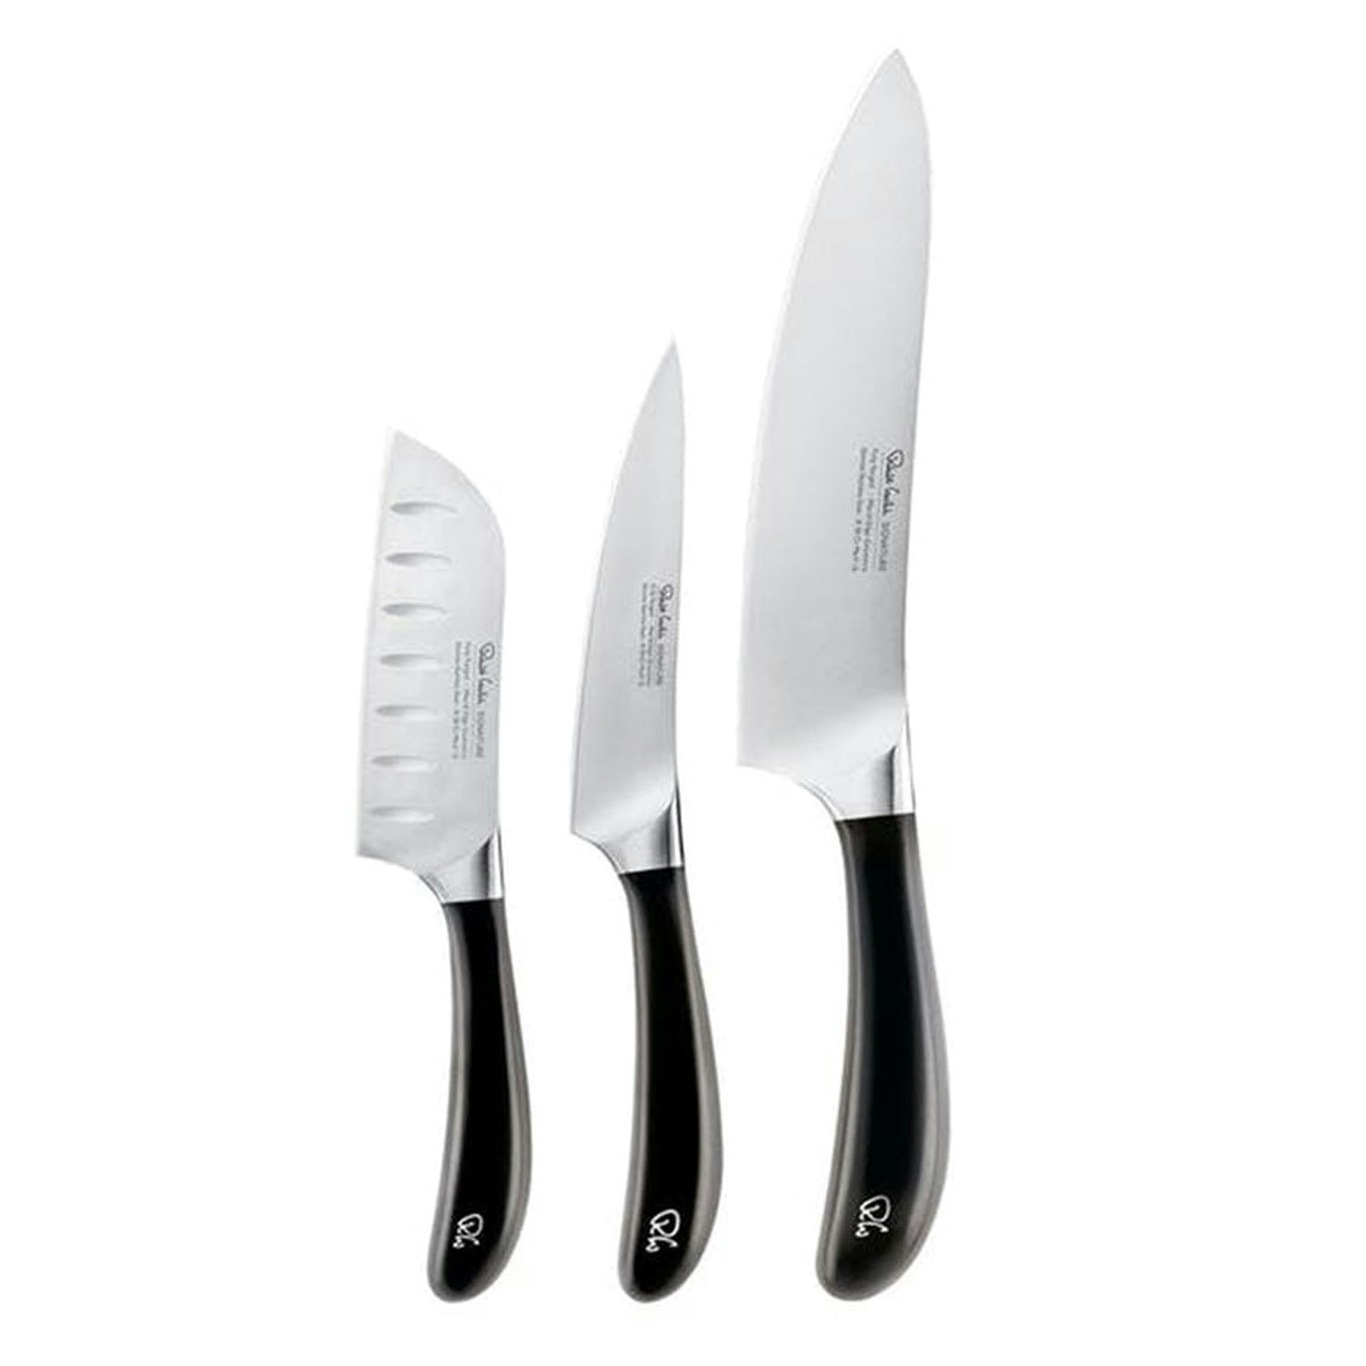 https://royaldesign.com/image/2/robert-welch-signature-knife-set-3-pieces-0?w=800&quality=80